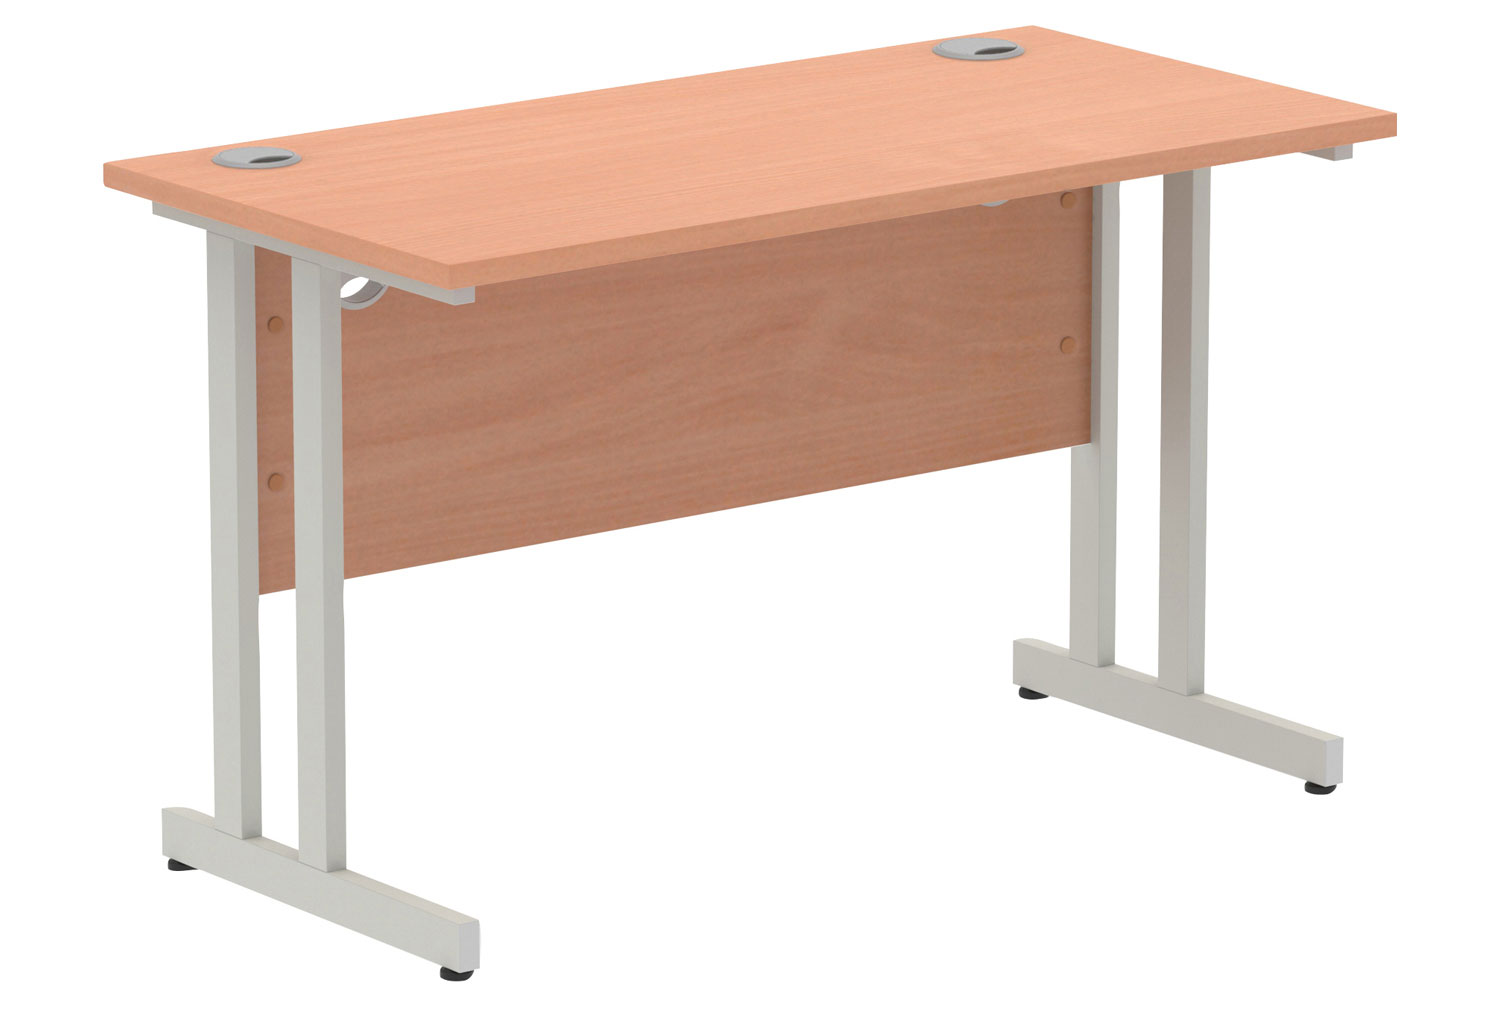 Vitali C-Leg Narrow Rectangular Office Desk (Silver Legs), 120w60dx73h (cm), Beech